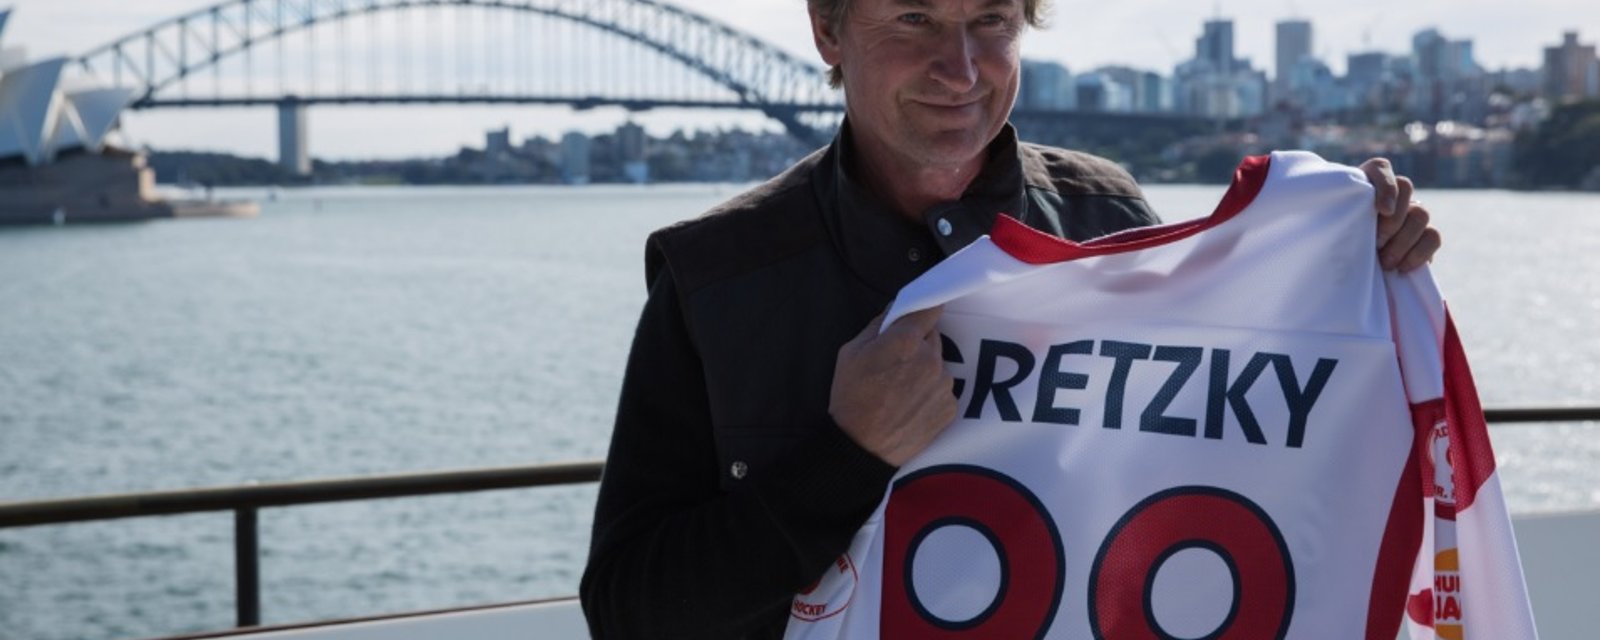 Un prestigieux record de Wayne Gretzky en danger?